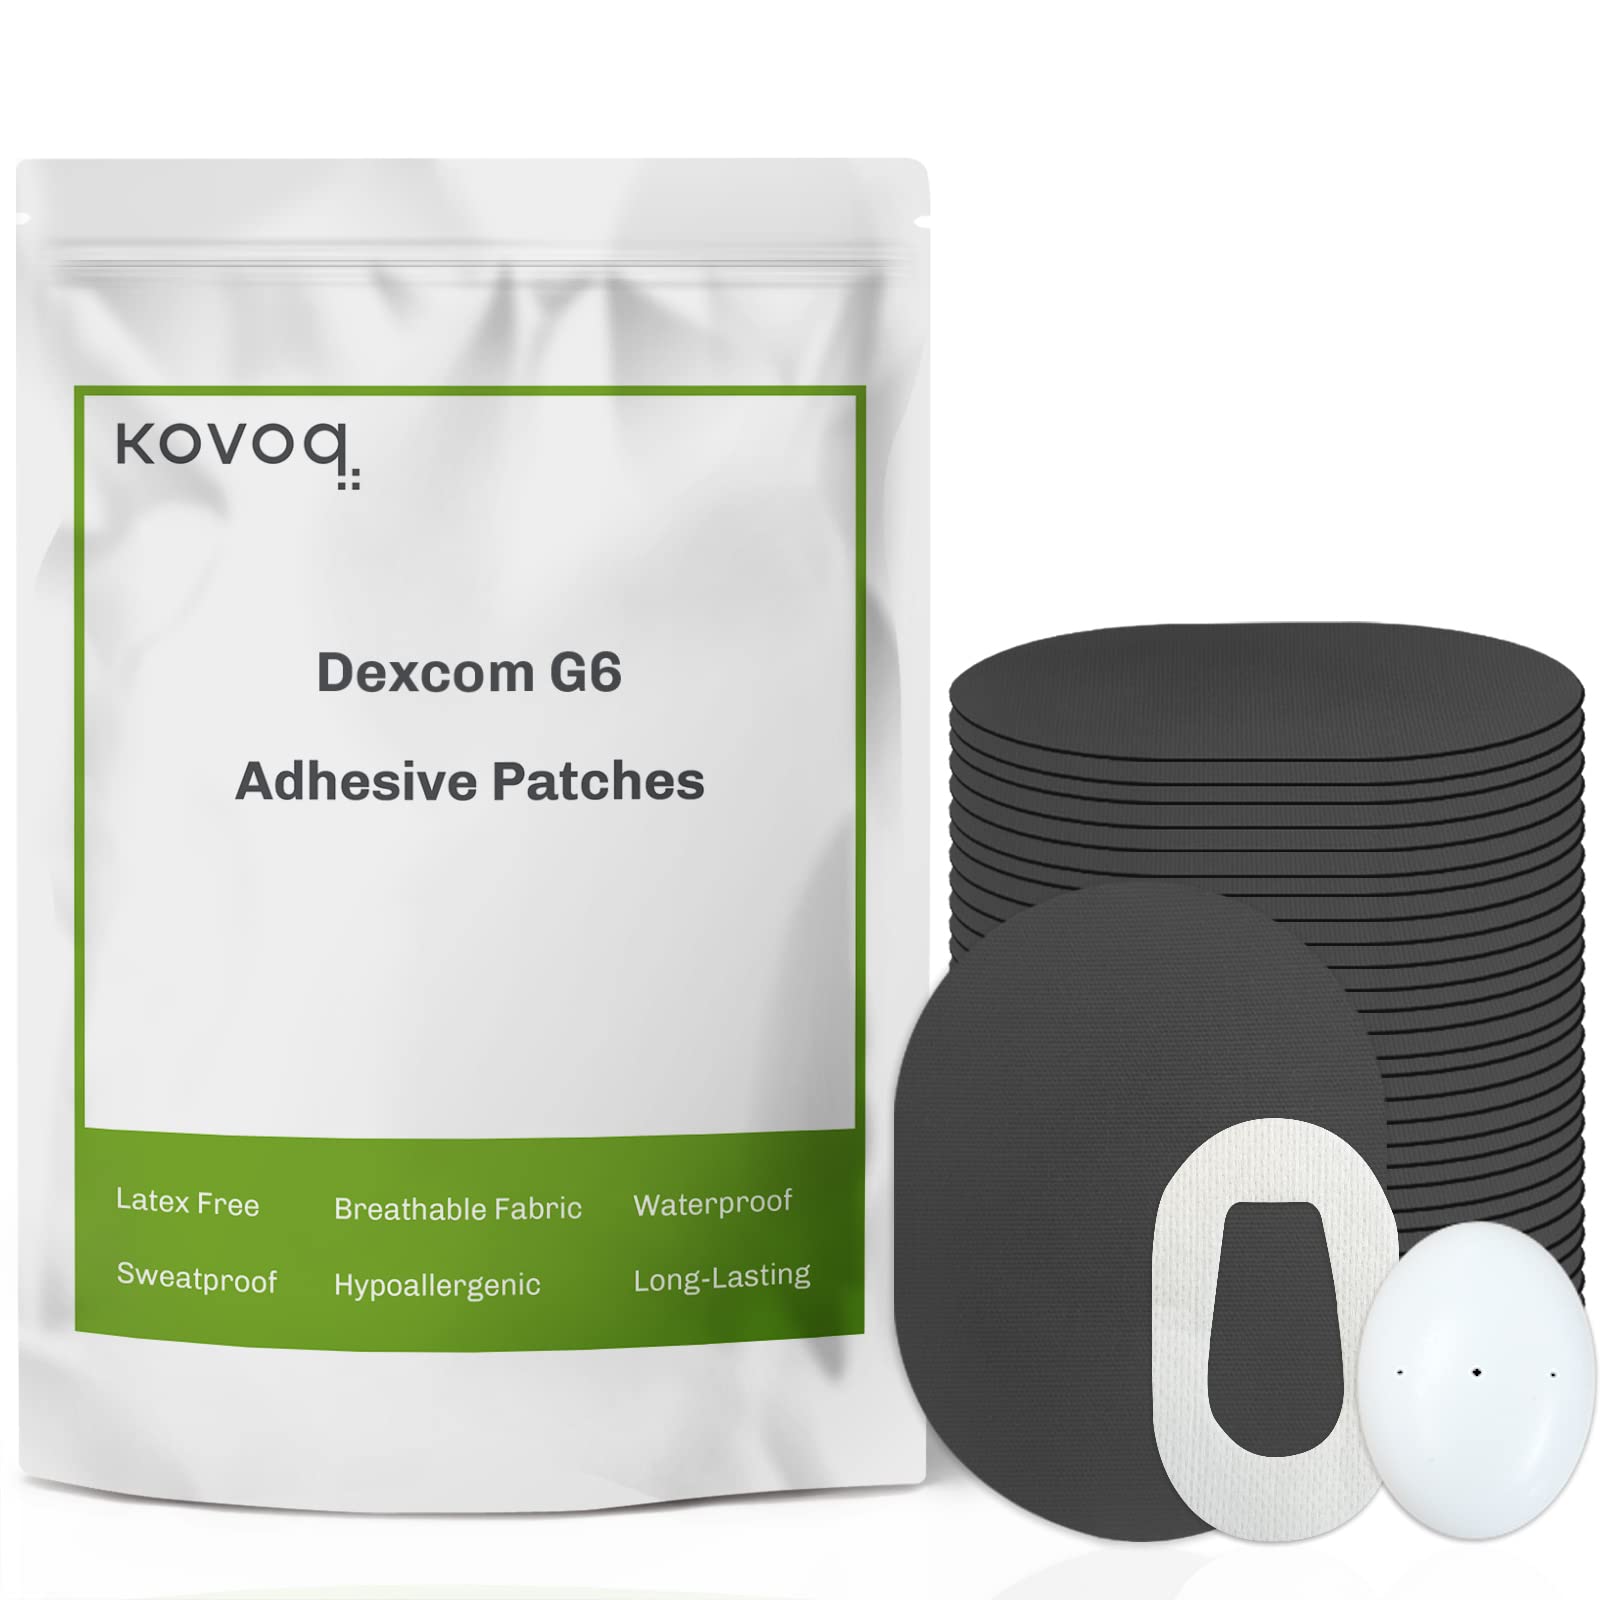  OhmRx Dexcom G6 Adhesive Patches Waterproof - Pre Cut Pack of  25 Black Color Dexcom G6 Sensors Patches Lasts 10-14 Days Dexcom G6 Sensor  Covers : Health & Household